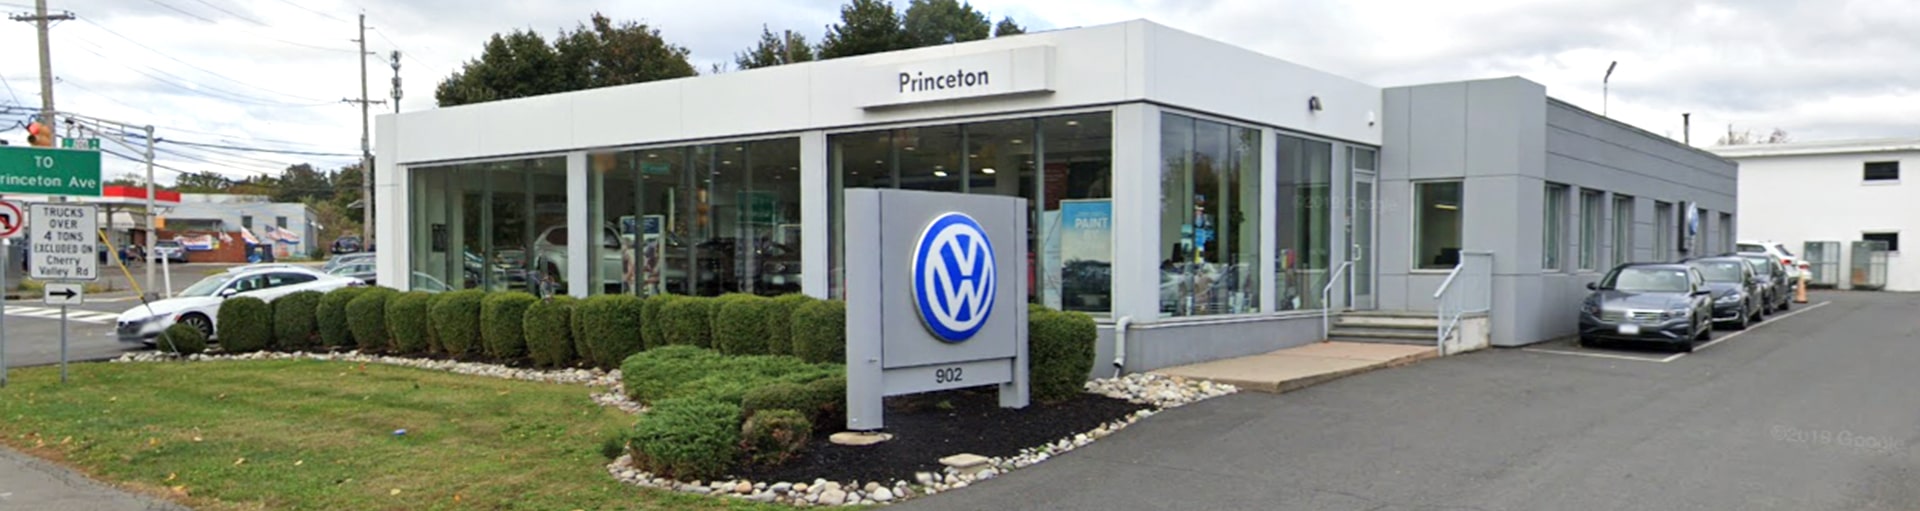 Volkswagen Princeton A/C Service & Repair